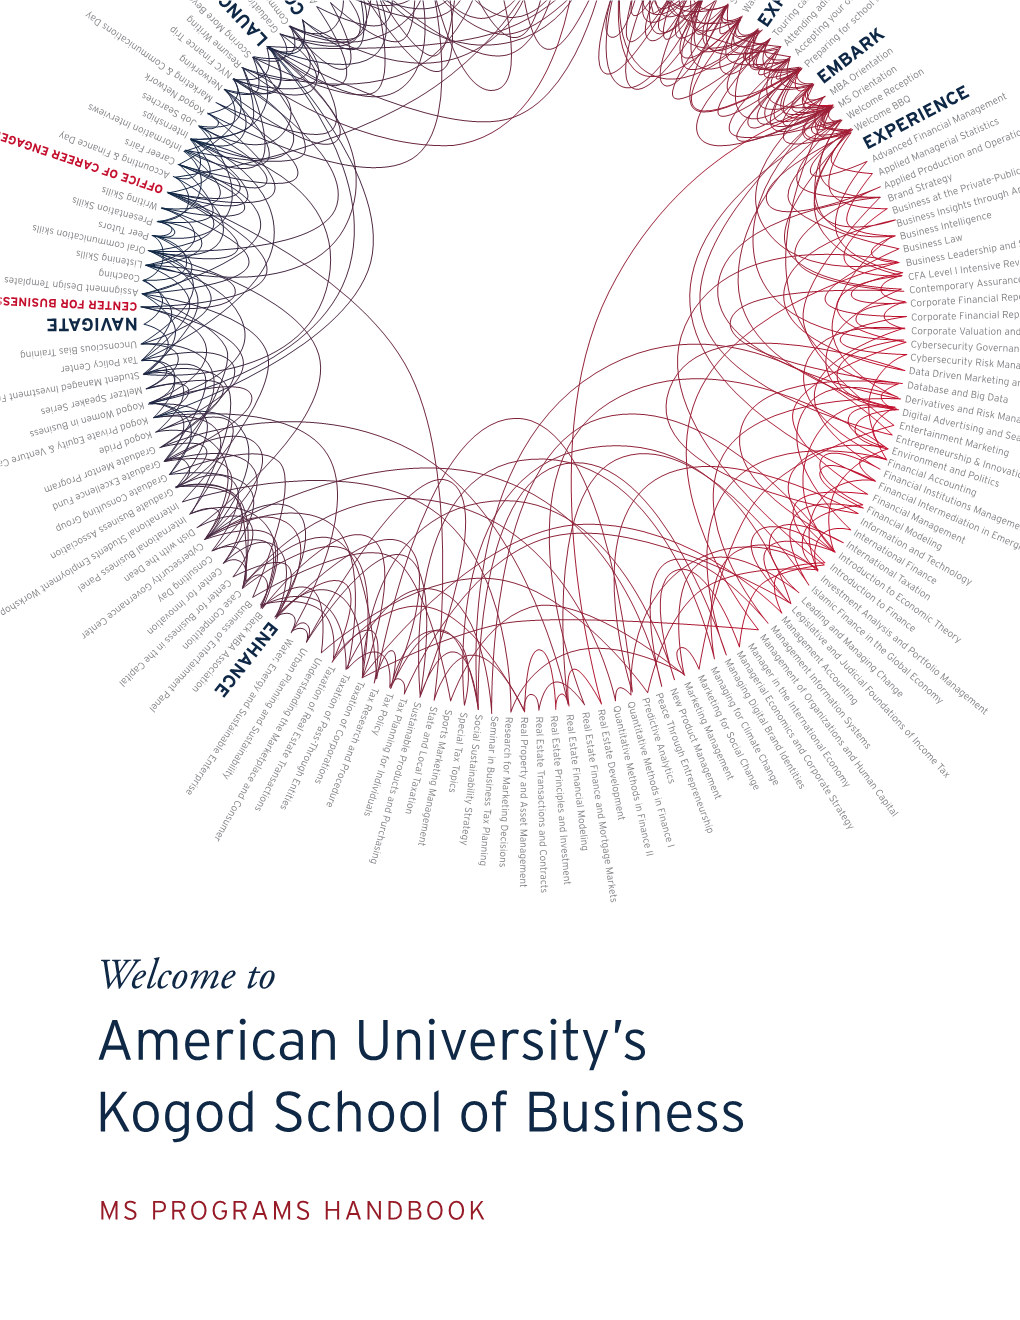 Kogod School of Business Master's Program Welcome Booklet